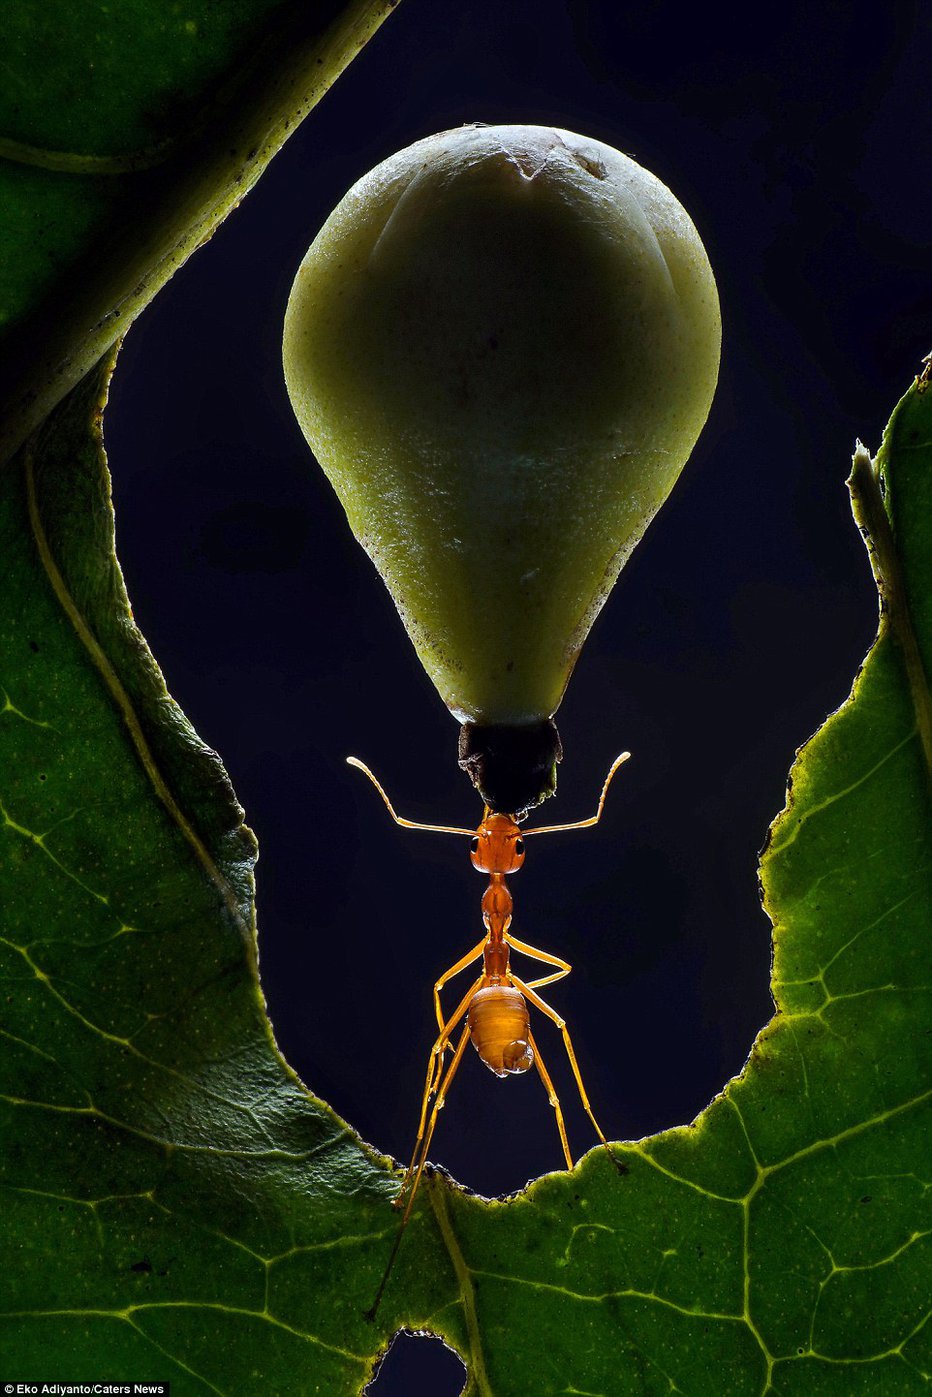 Fotografija: Tako je mravlja nosila sadež.